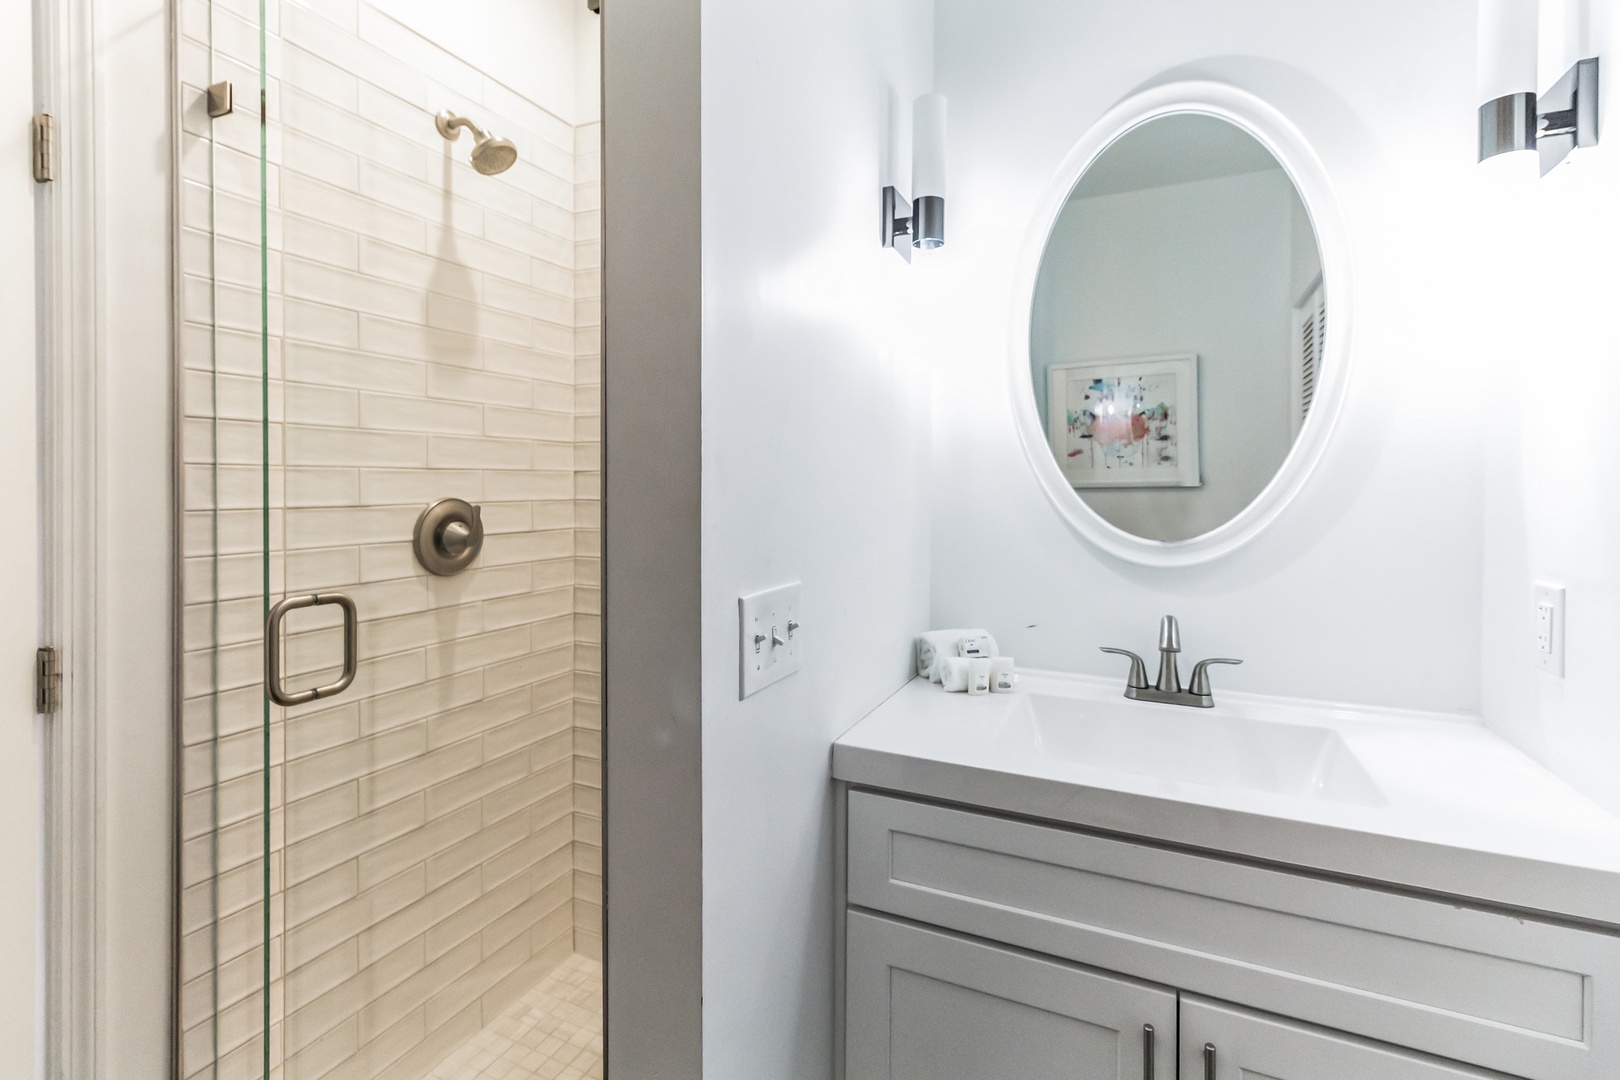 Unit C2: The 1st floor full bathroom offers a single vanity & glass shower